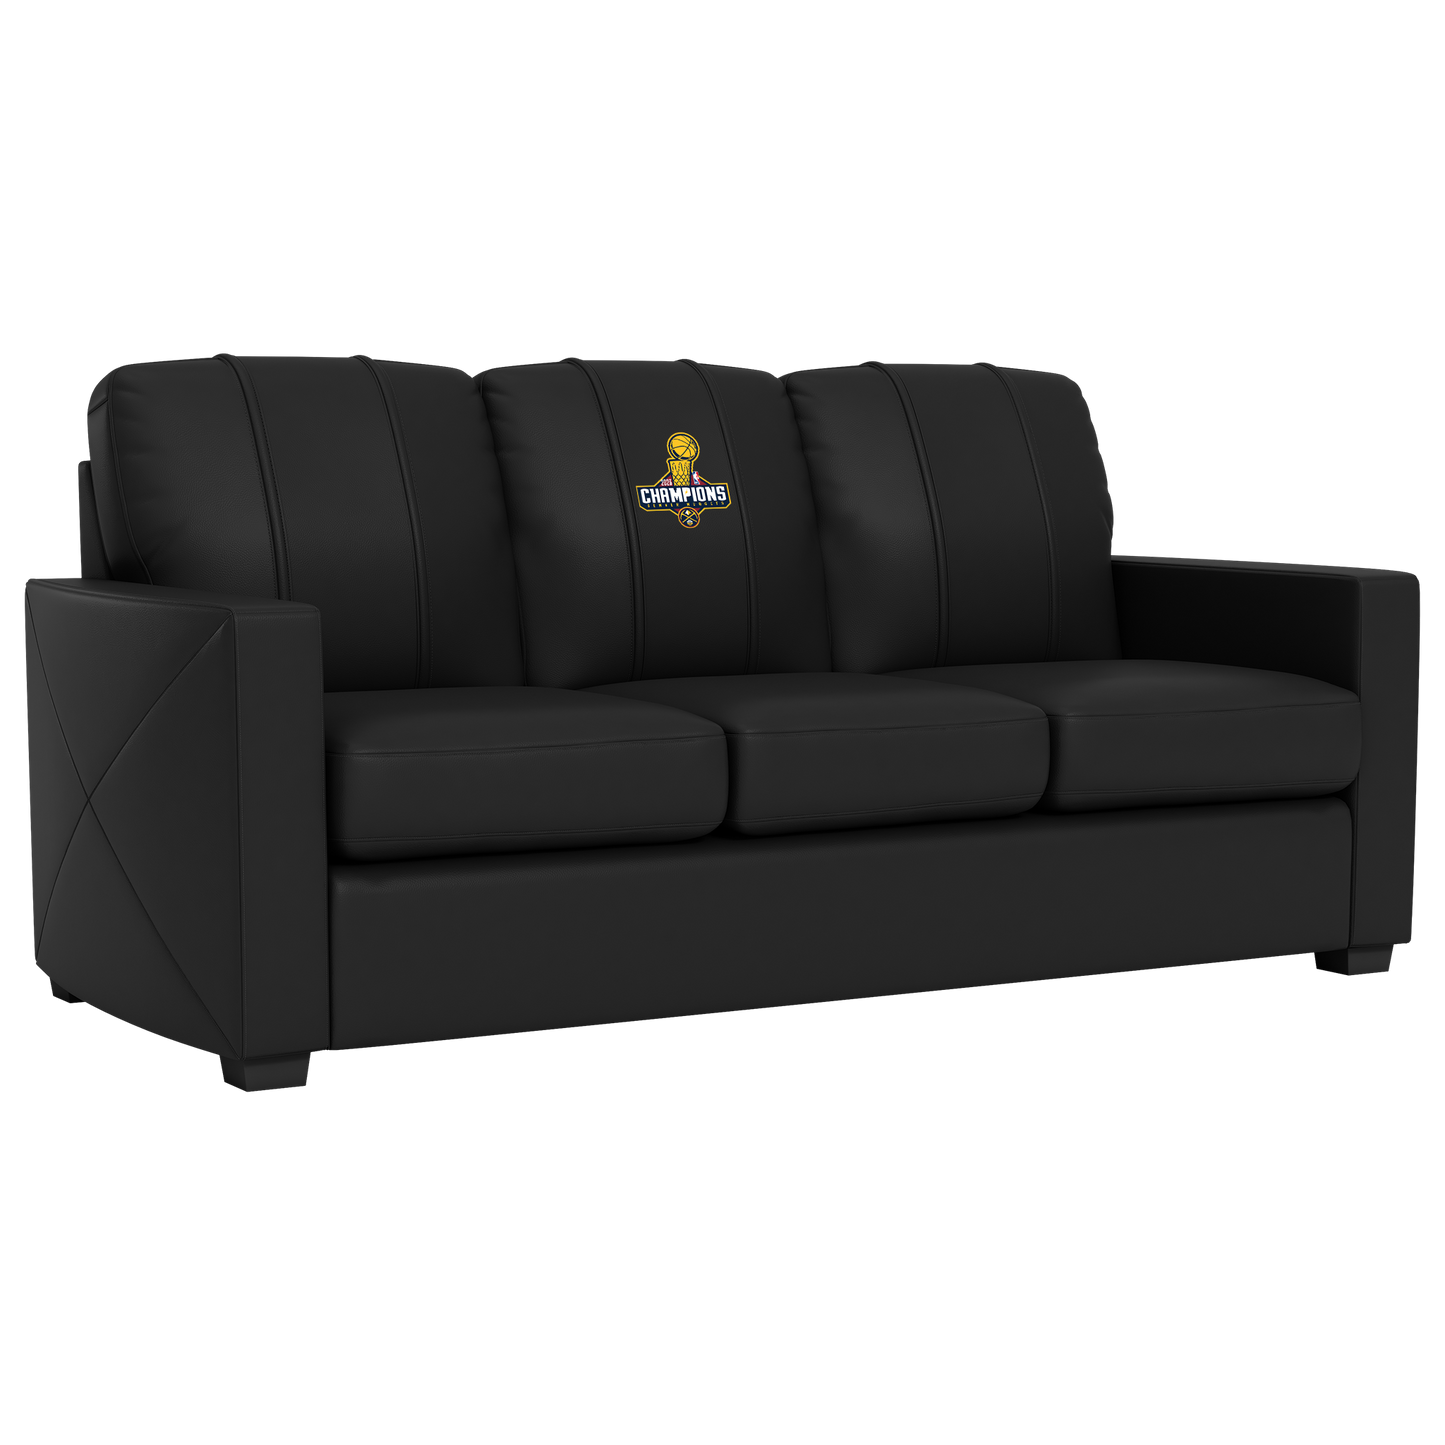 Silver Sofa with Denver Nuggets 2023 Championship Logo